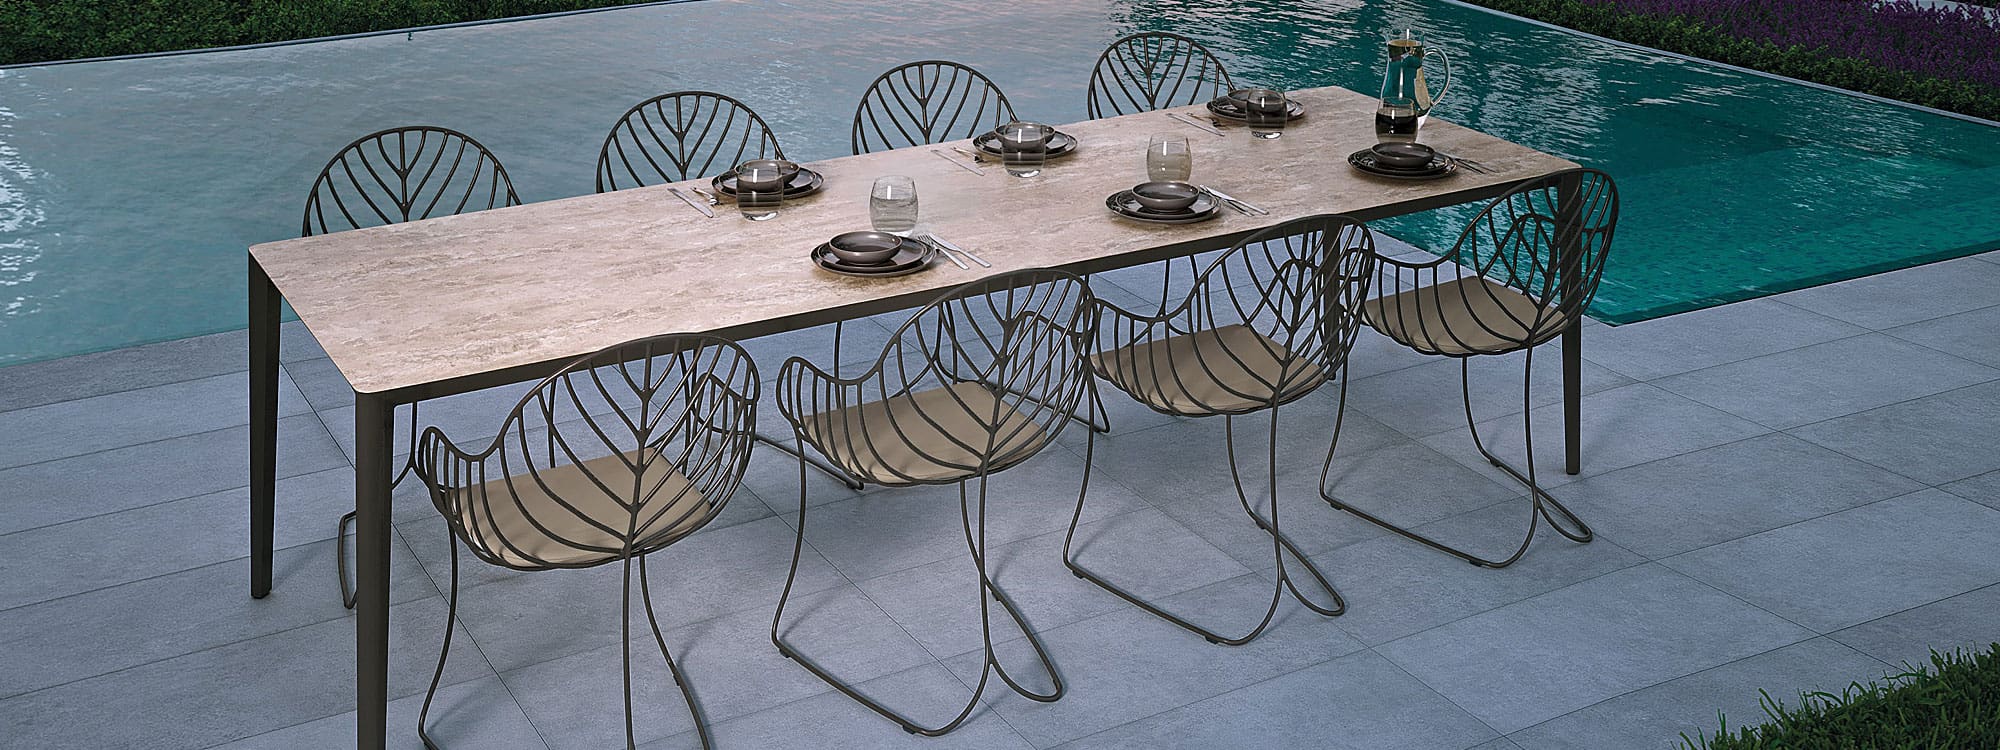 Image of Unite bronze garden table with Travertine ceramic top & bronze Folia chair by Royal Botania